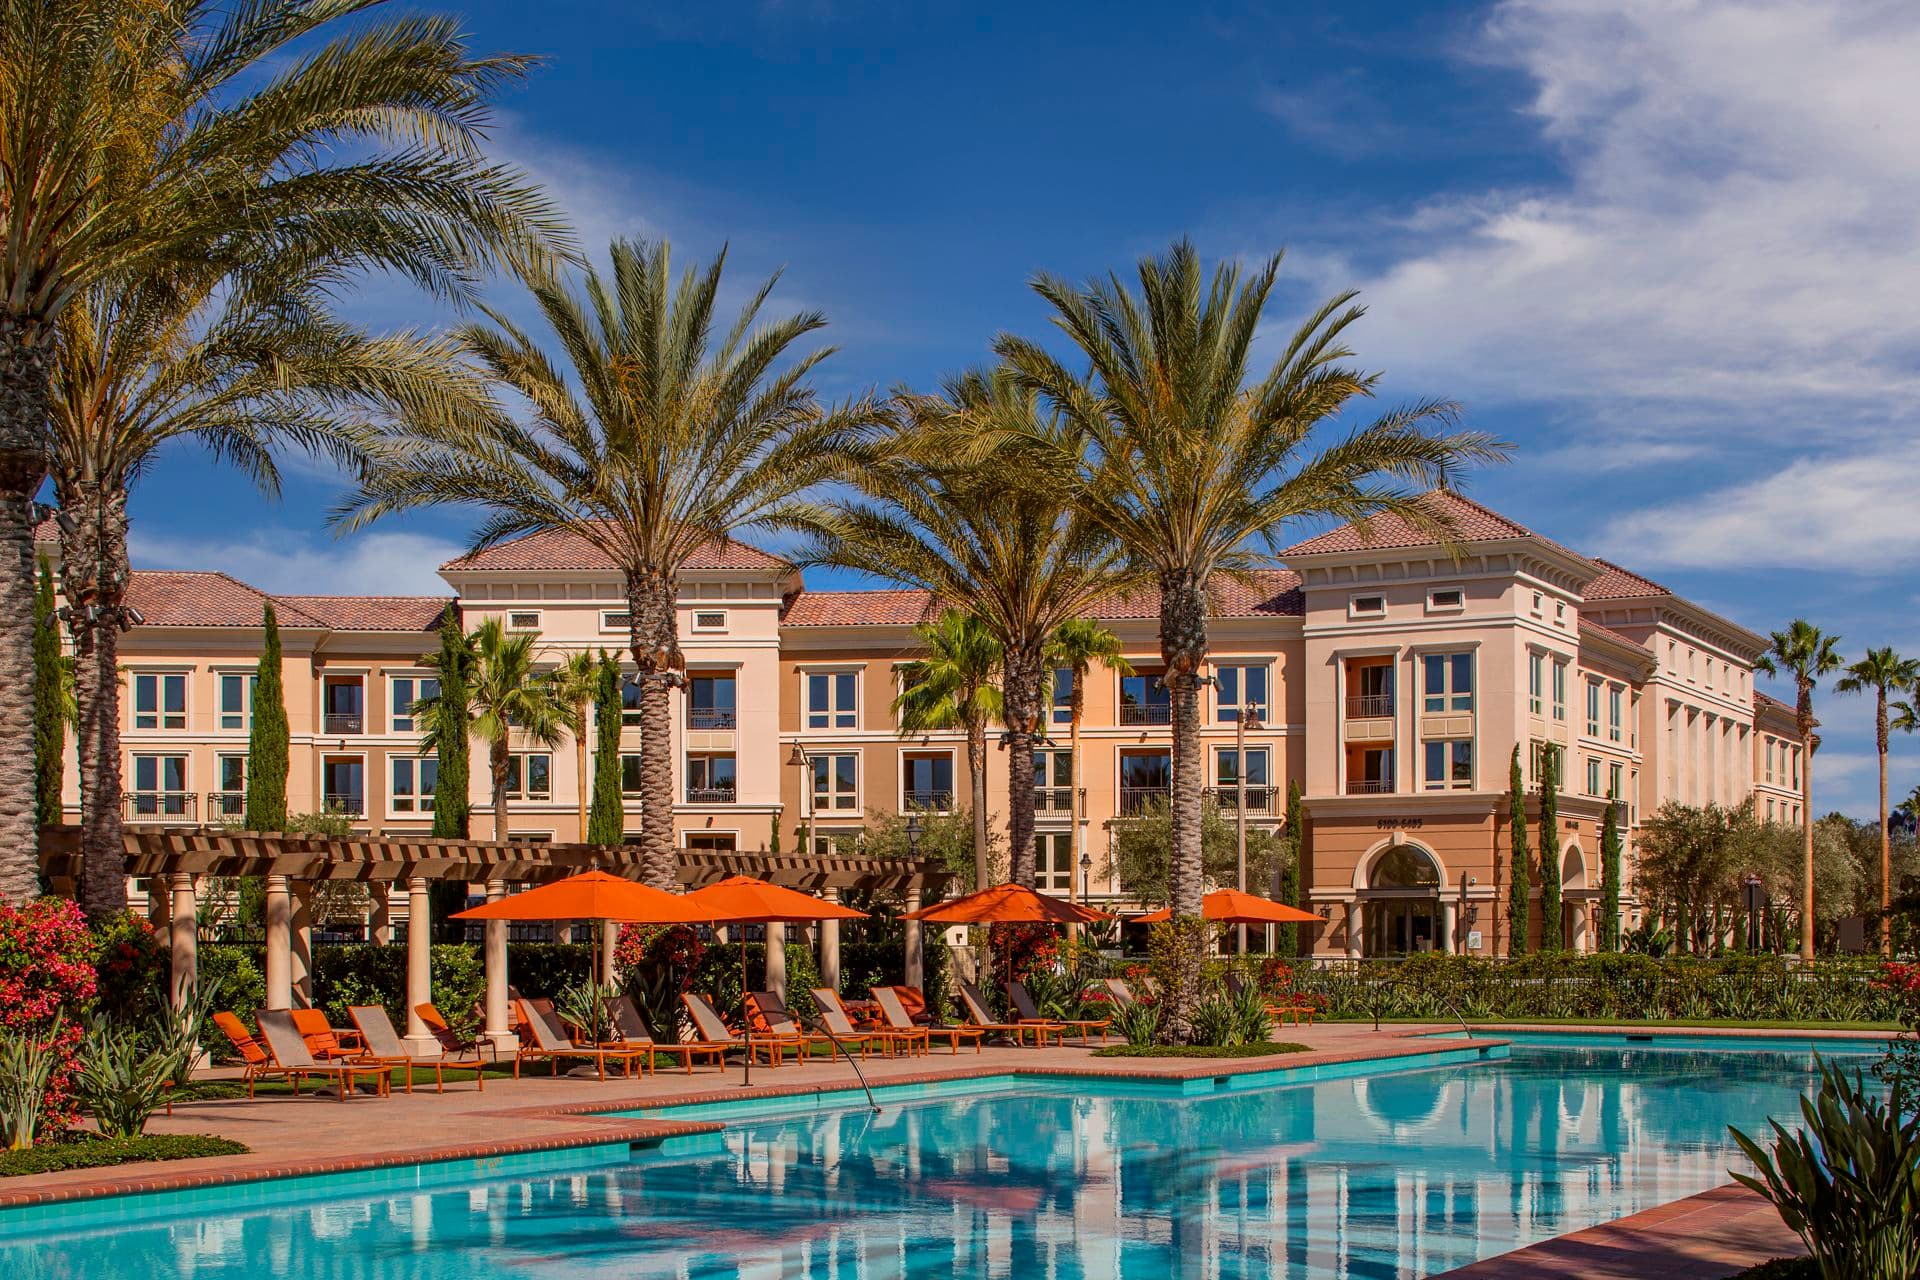 Exterior view of pool at Promenade Apartment Homes in Irvine, CA.